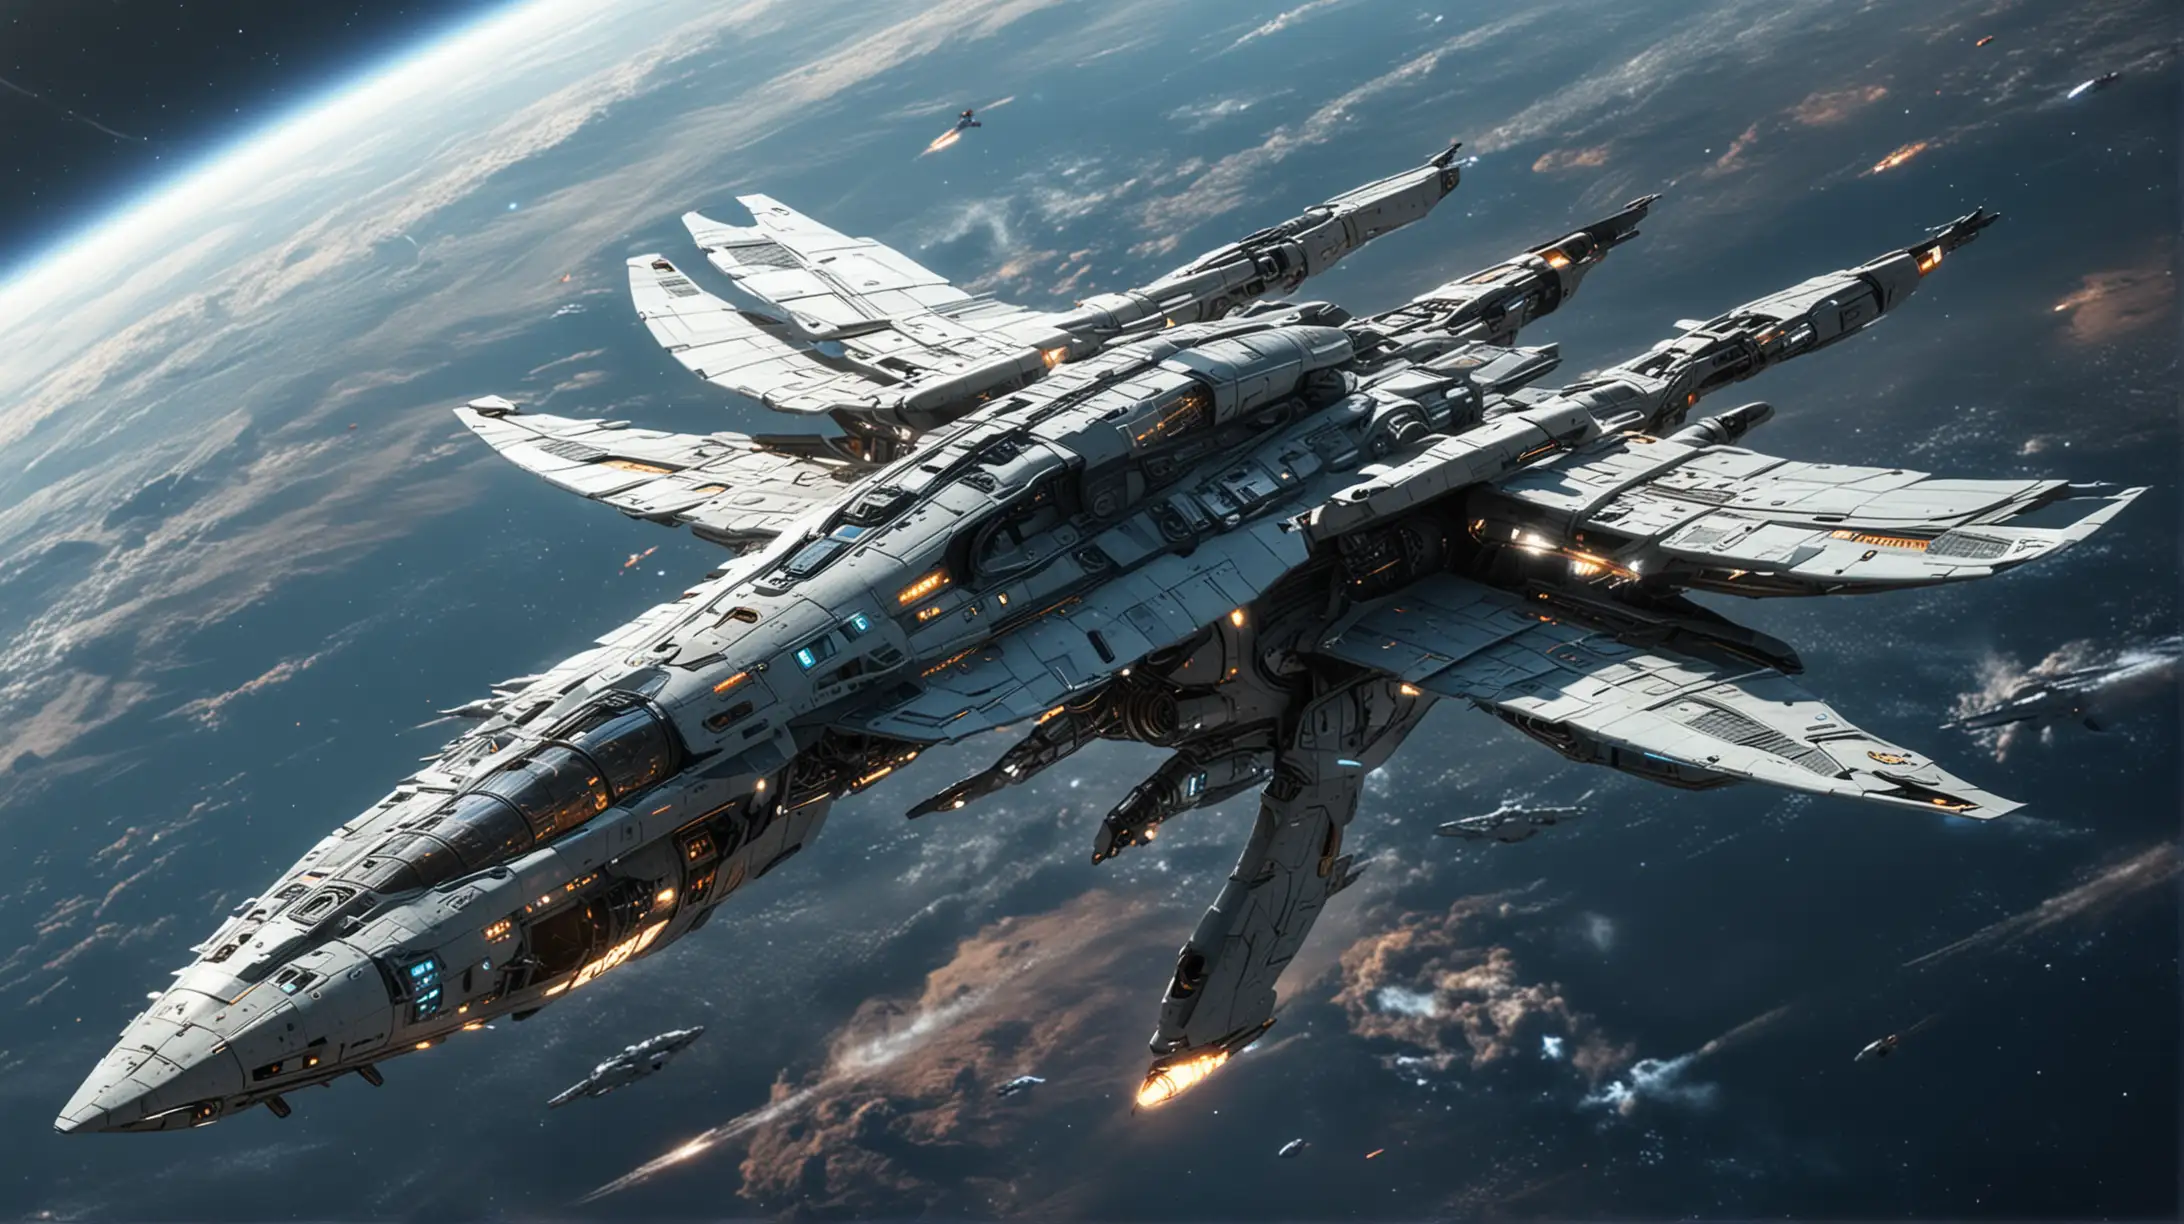 spaceship shaped like a dragonfly, four wings, space, sleek tech, futuristic, sci-fi